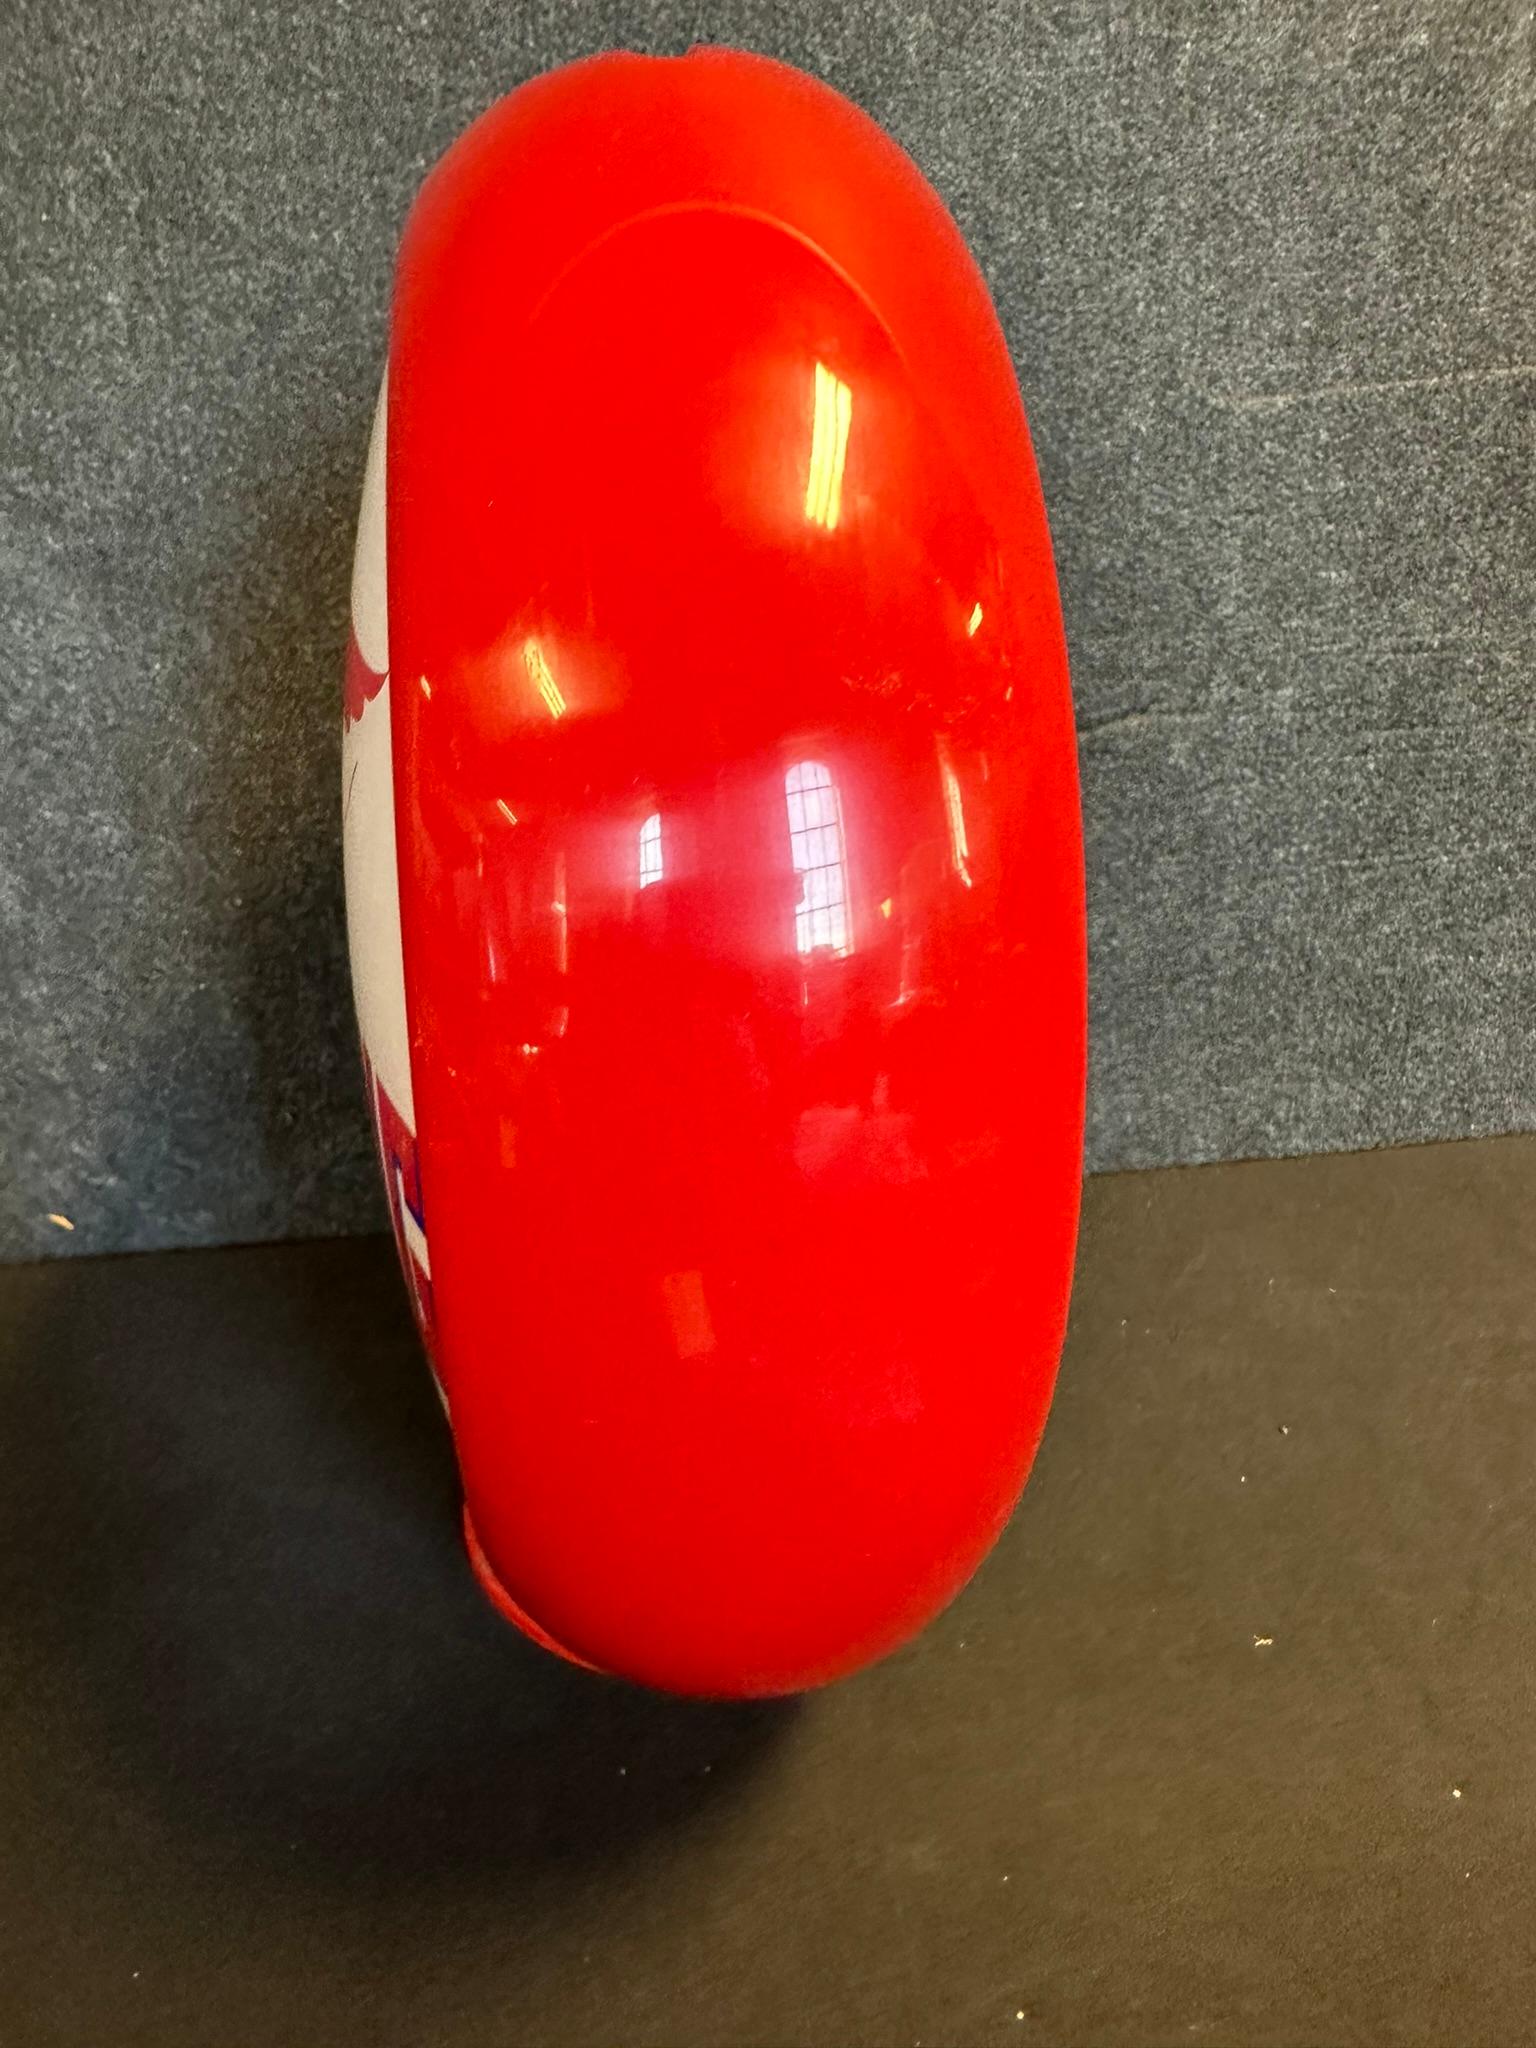 Fleet Wing Gas Pump Globe w/ Original Lenses & Red Capco Plastic Body